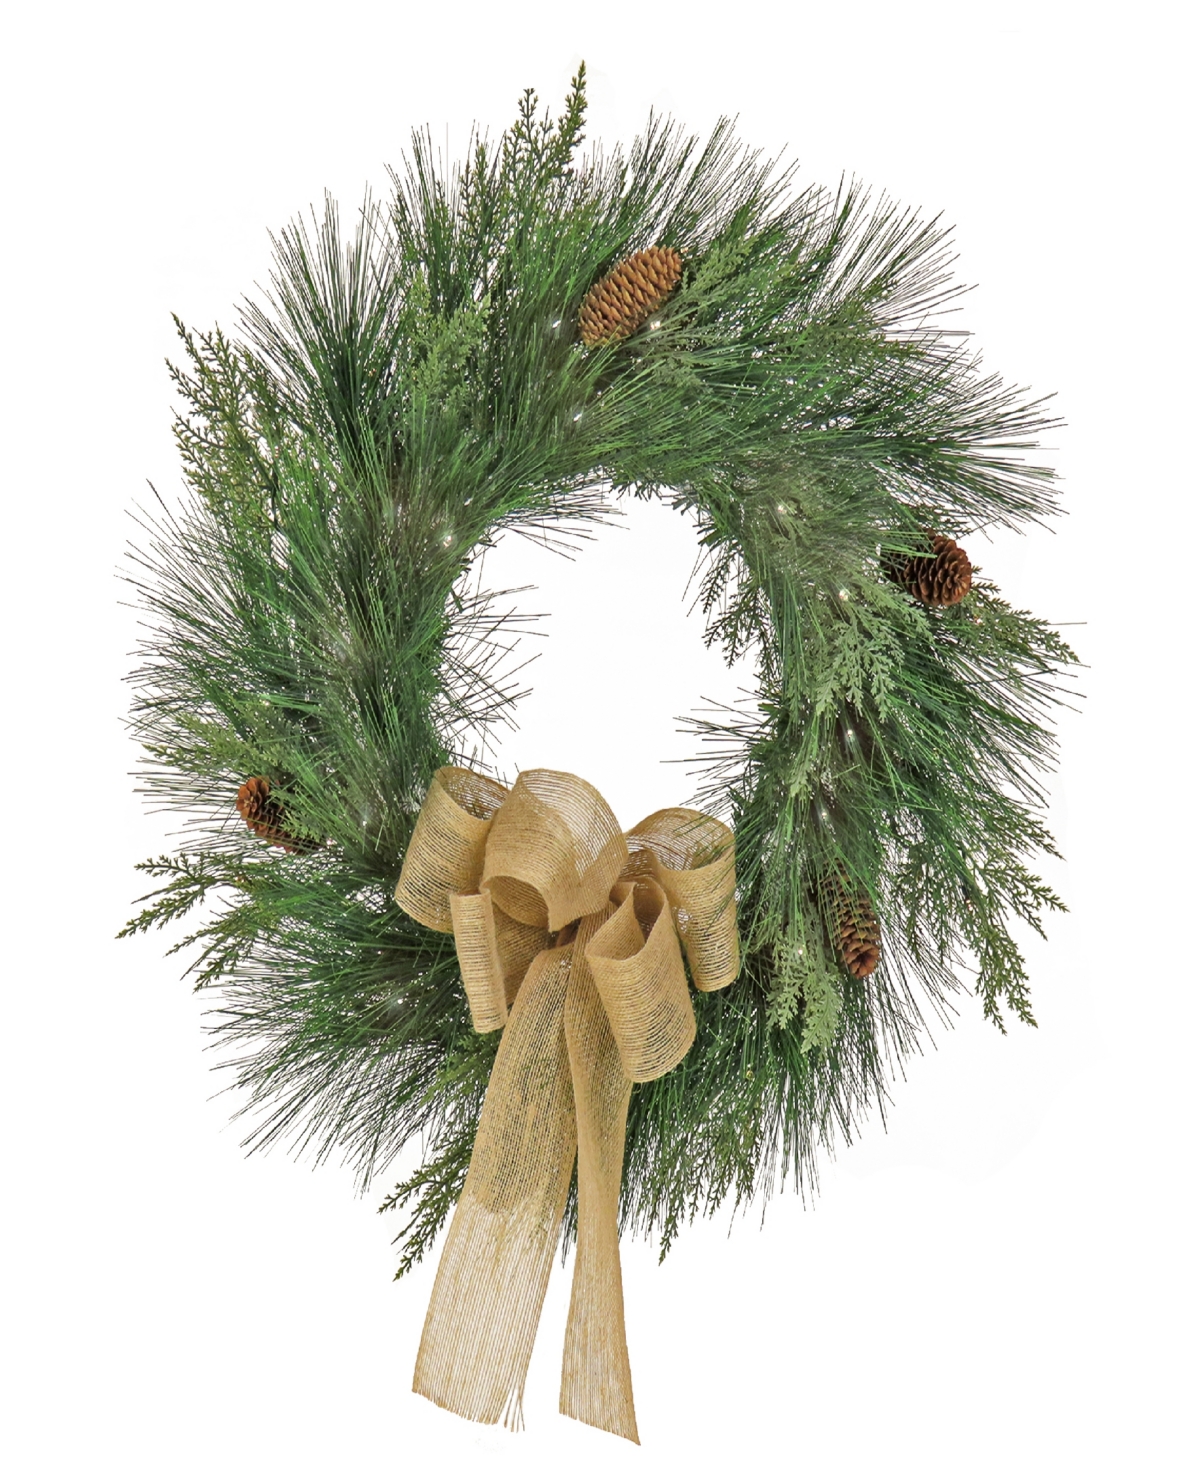 22" Hgtv Home Collection Pre-Lit Tie Cedar Wreath - Green